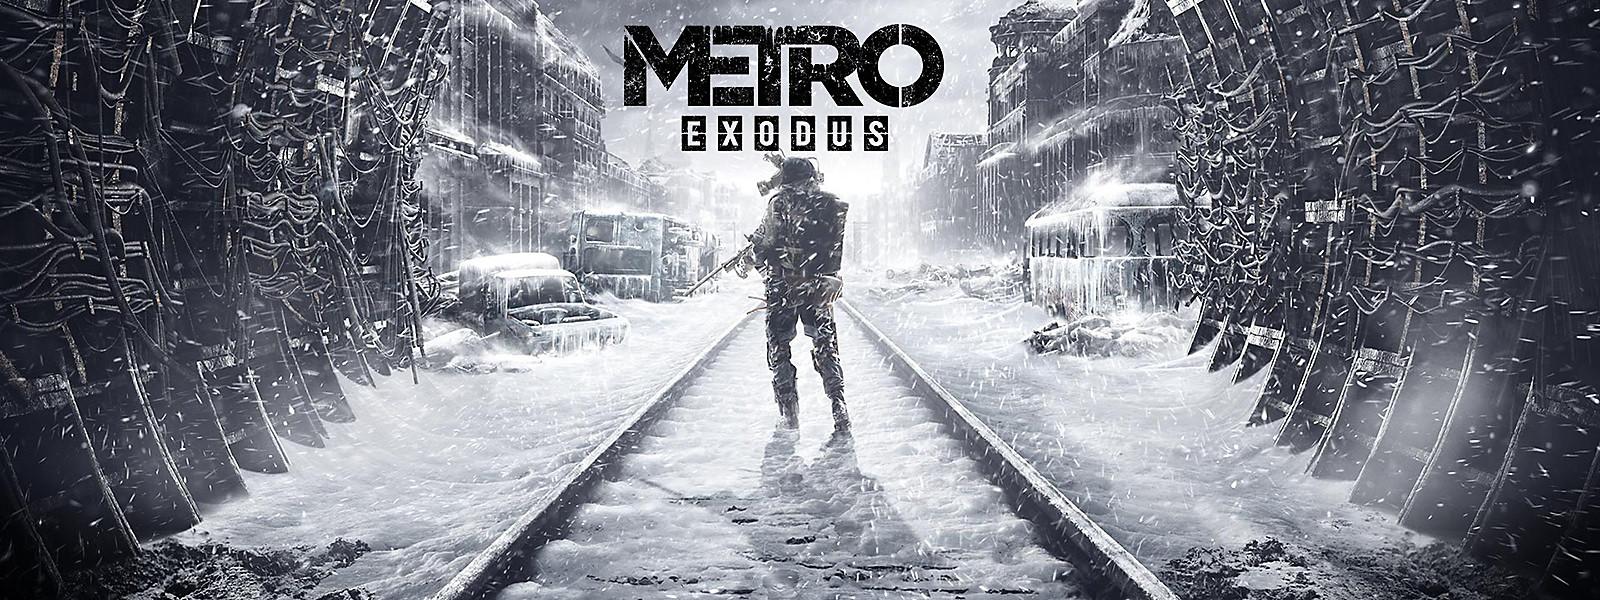 Metro Exodus Logo - Metro Exodus Game | PS4 - PlayStation